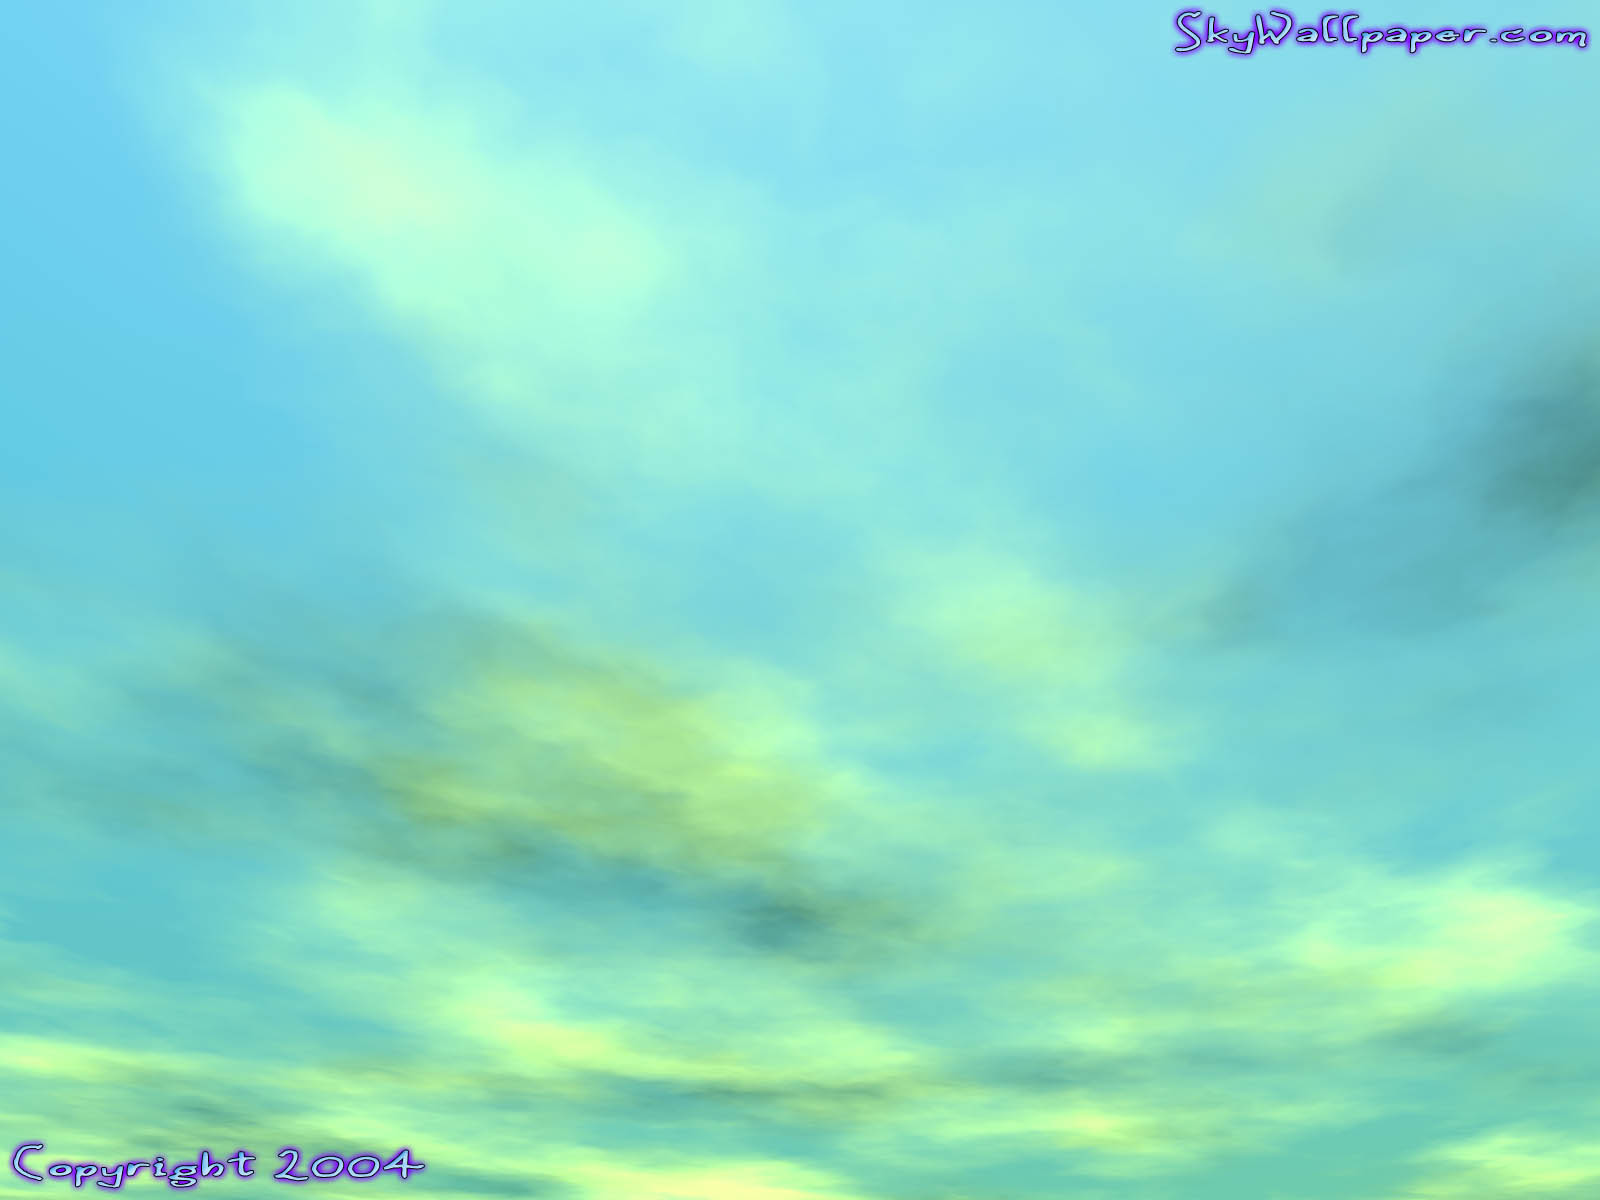 "Digital Sky Wallpaper Image" - Wallpaper No. 100 of 109. Right click for saving options.